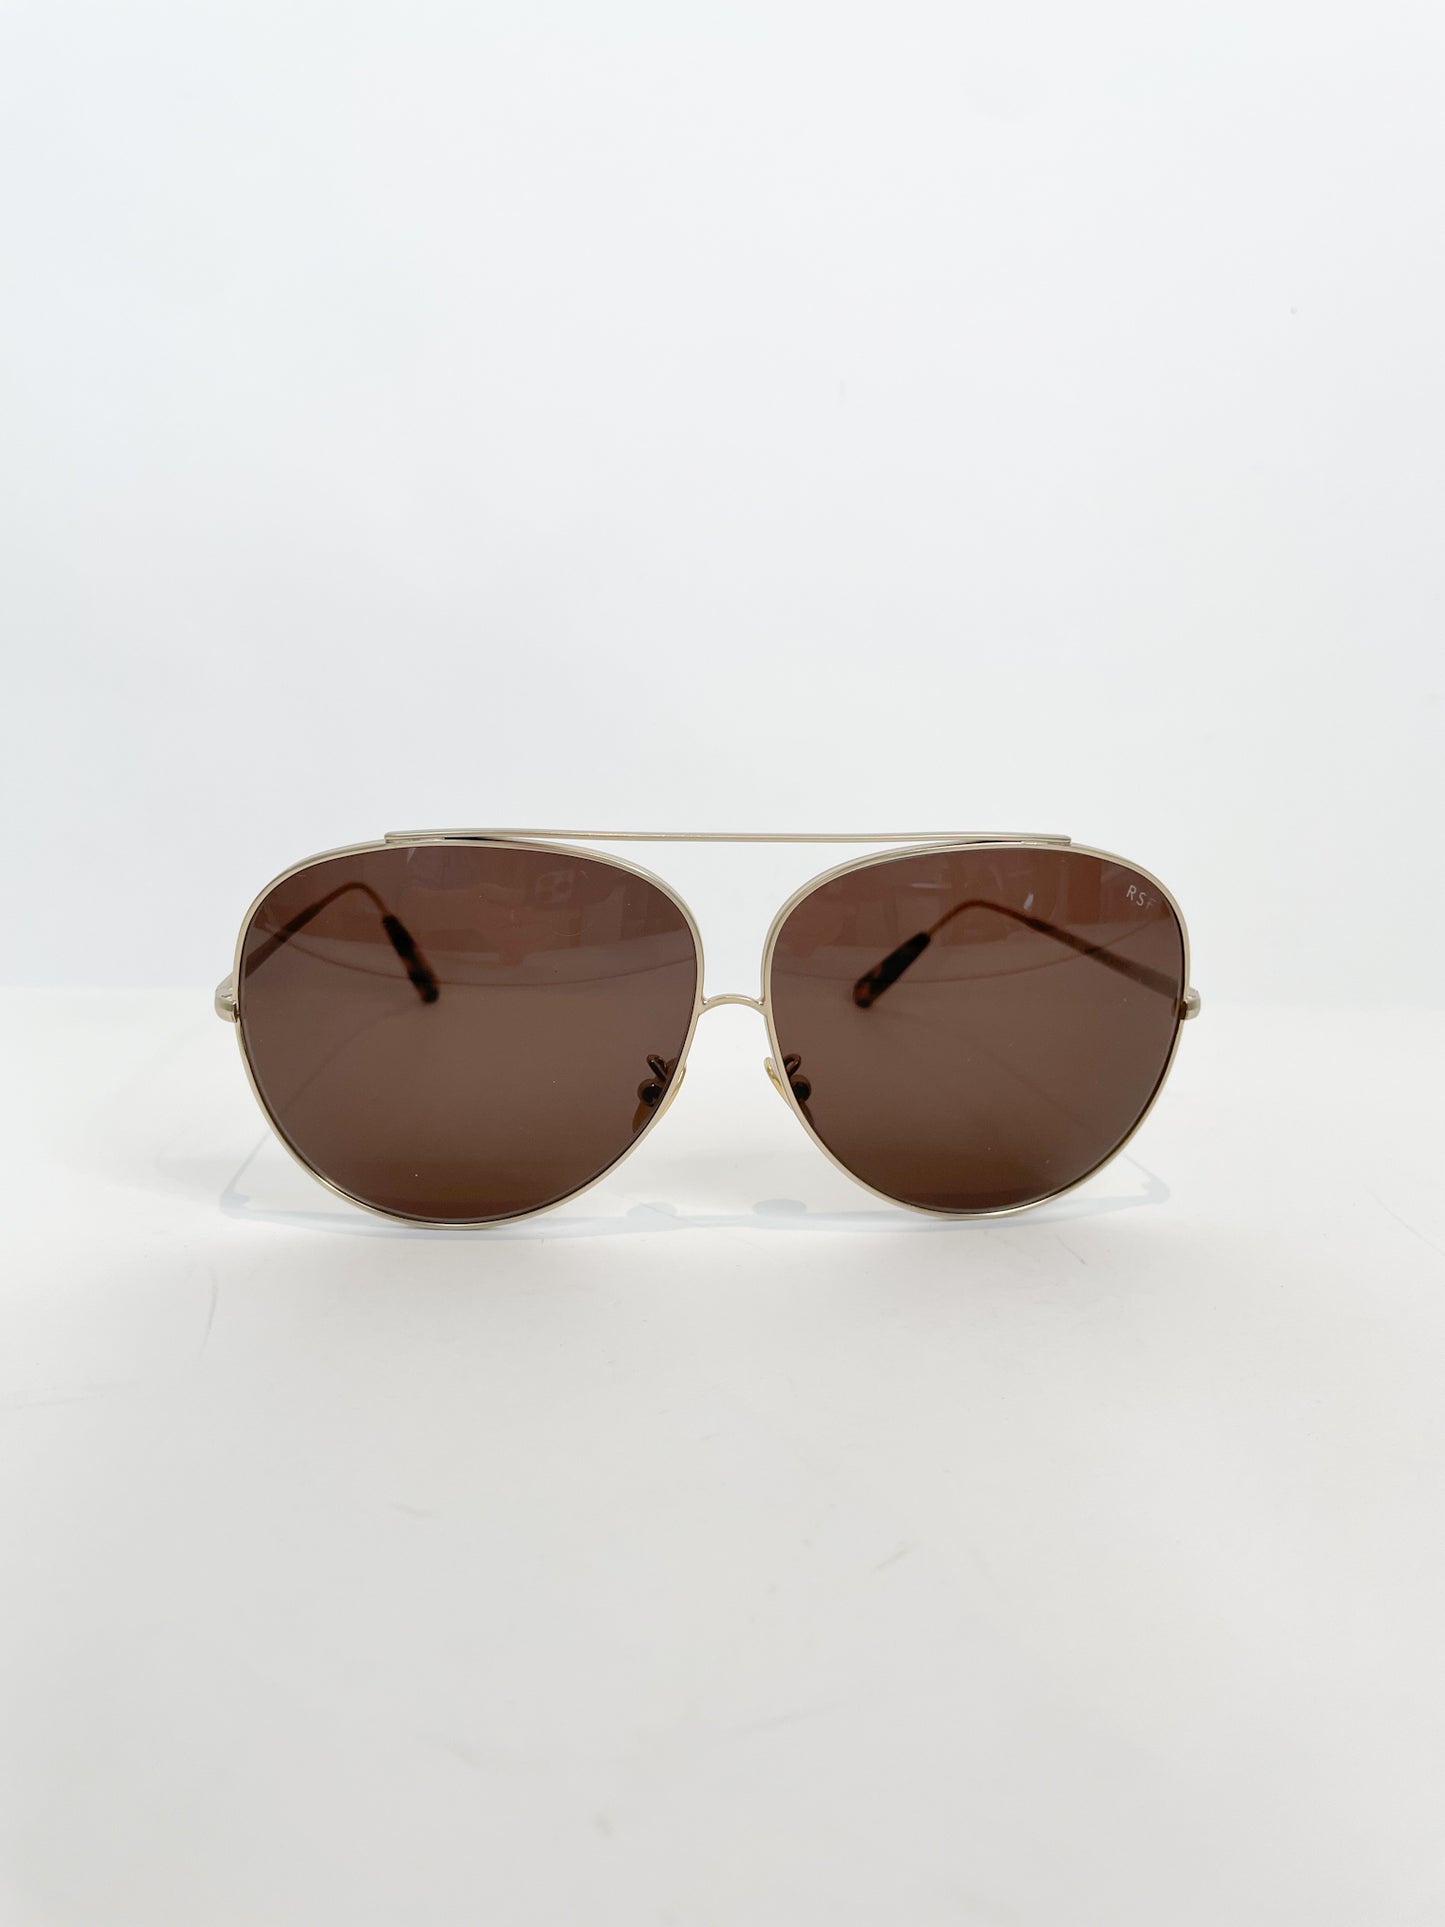 RetroSuperFuture Handmade in Italy Gold Aviator Sunglasses